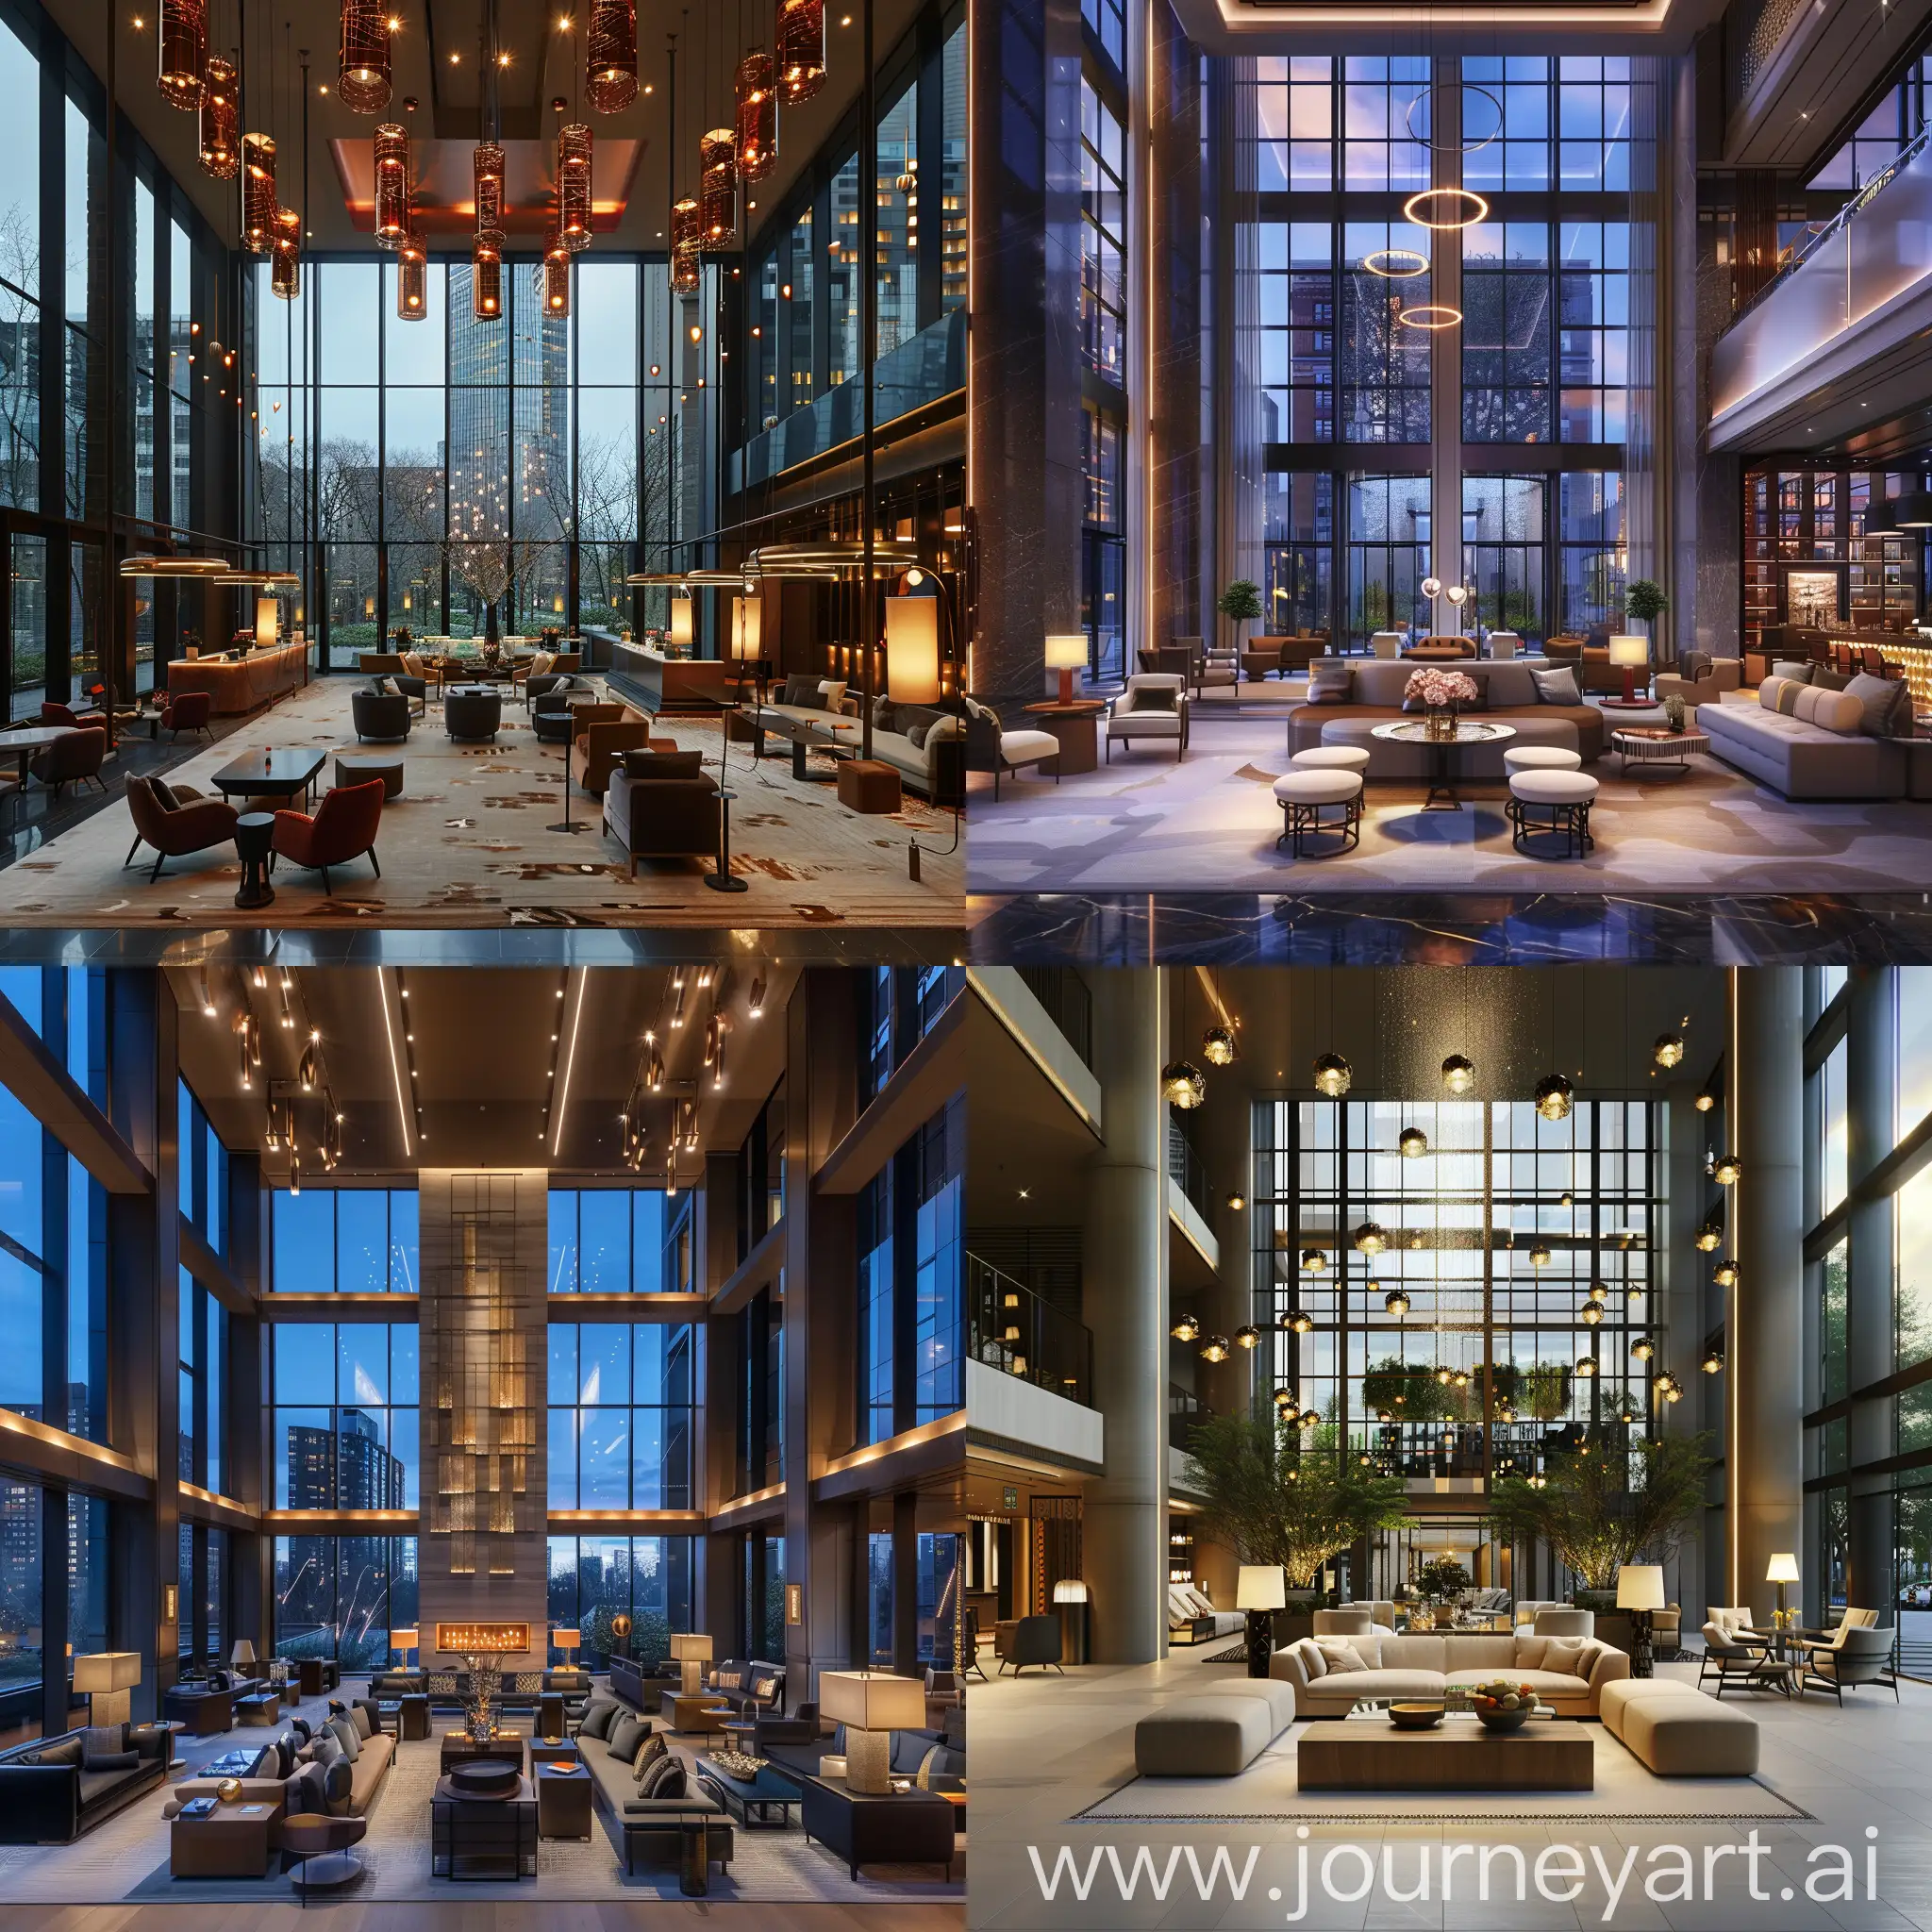 Elegant-NeoCosmic-Hotel-Lobby-with-Designer-Italian-Furniture-and-DoubleLength-Windows